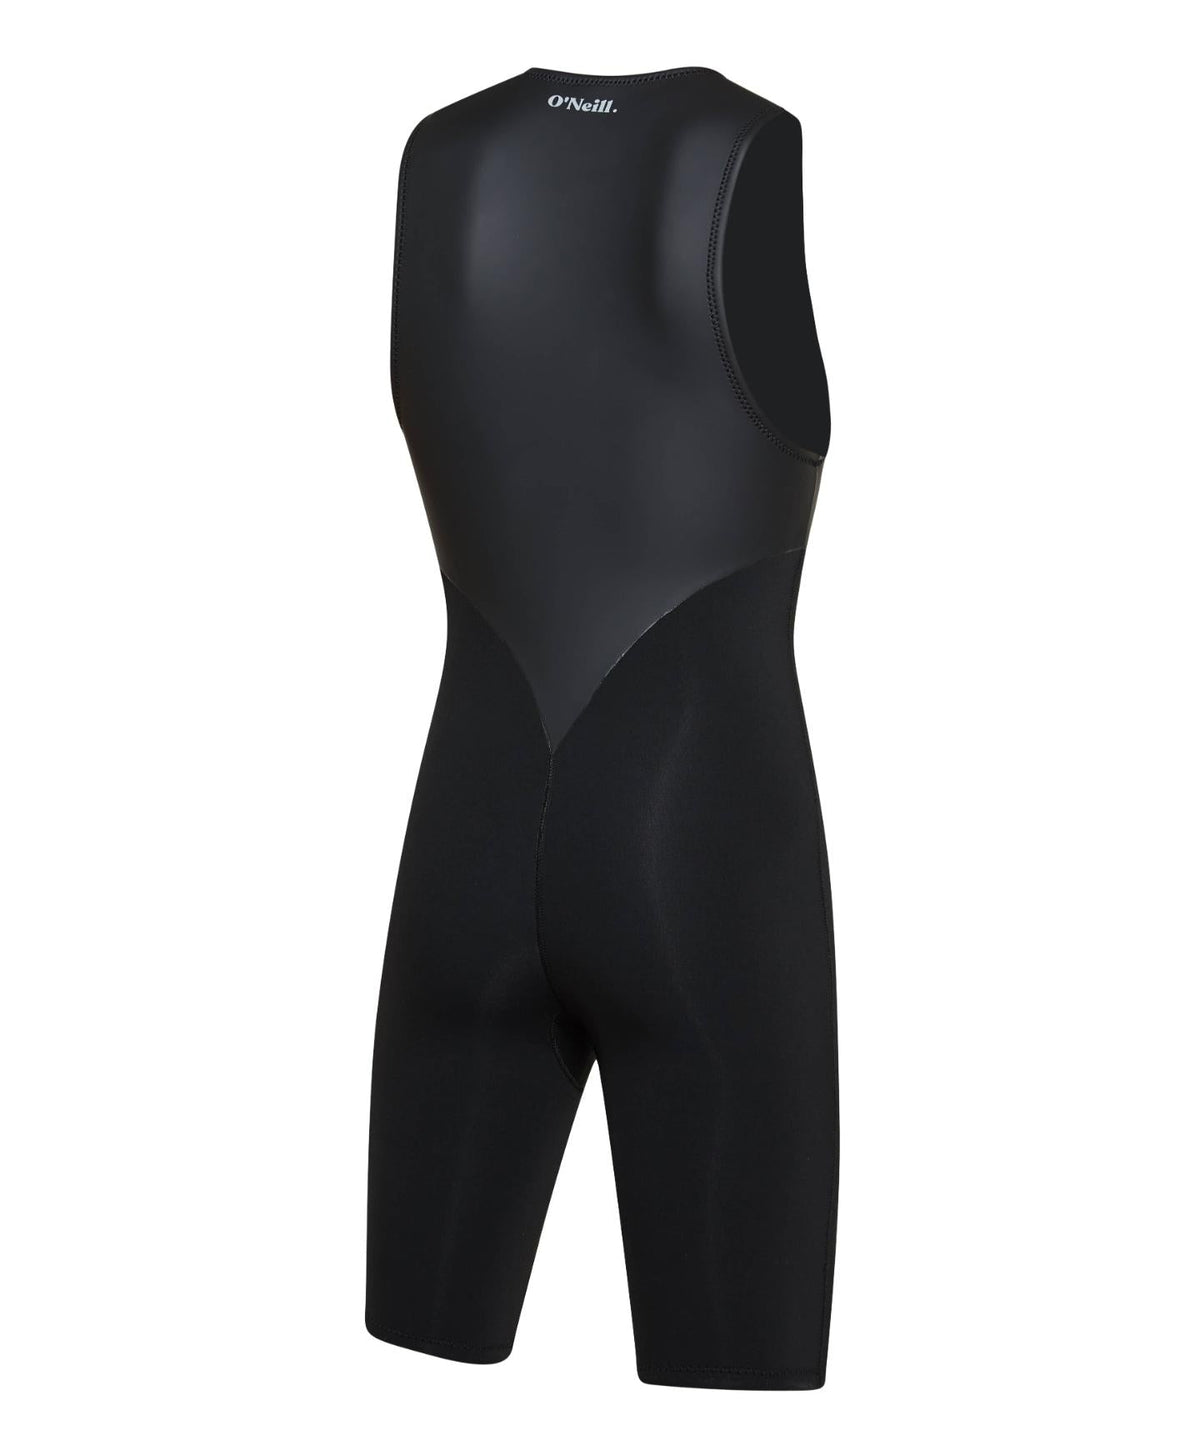 O'Riginal 2mm Short John Spring Suit Wetsuit - Black